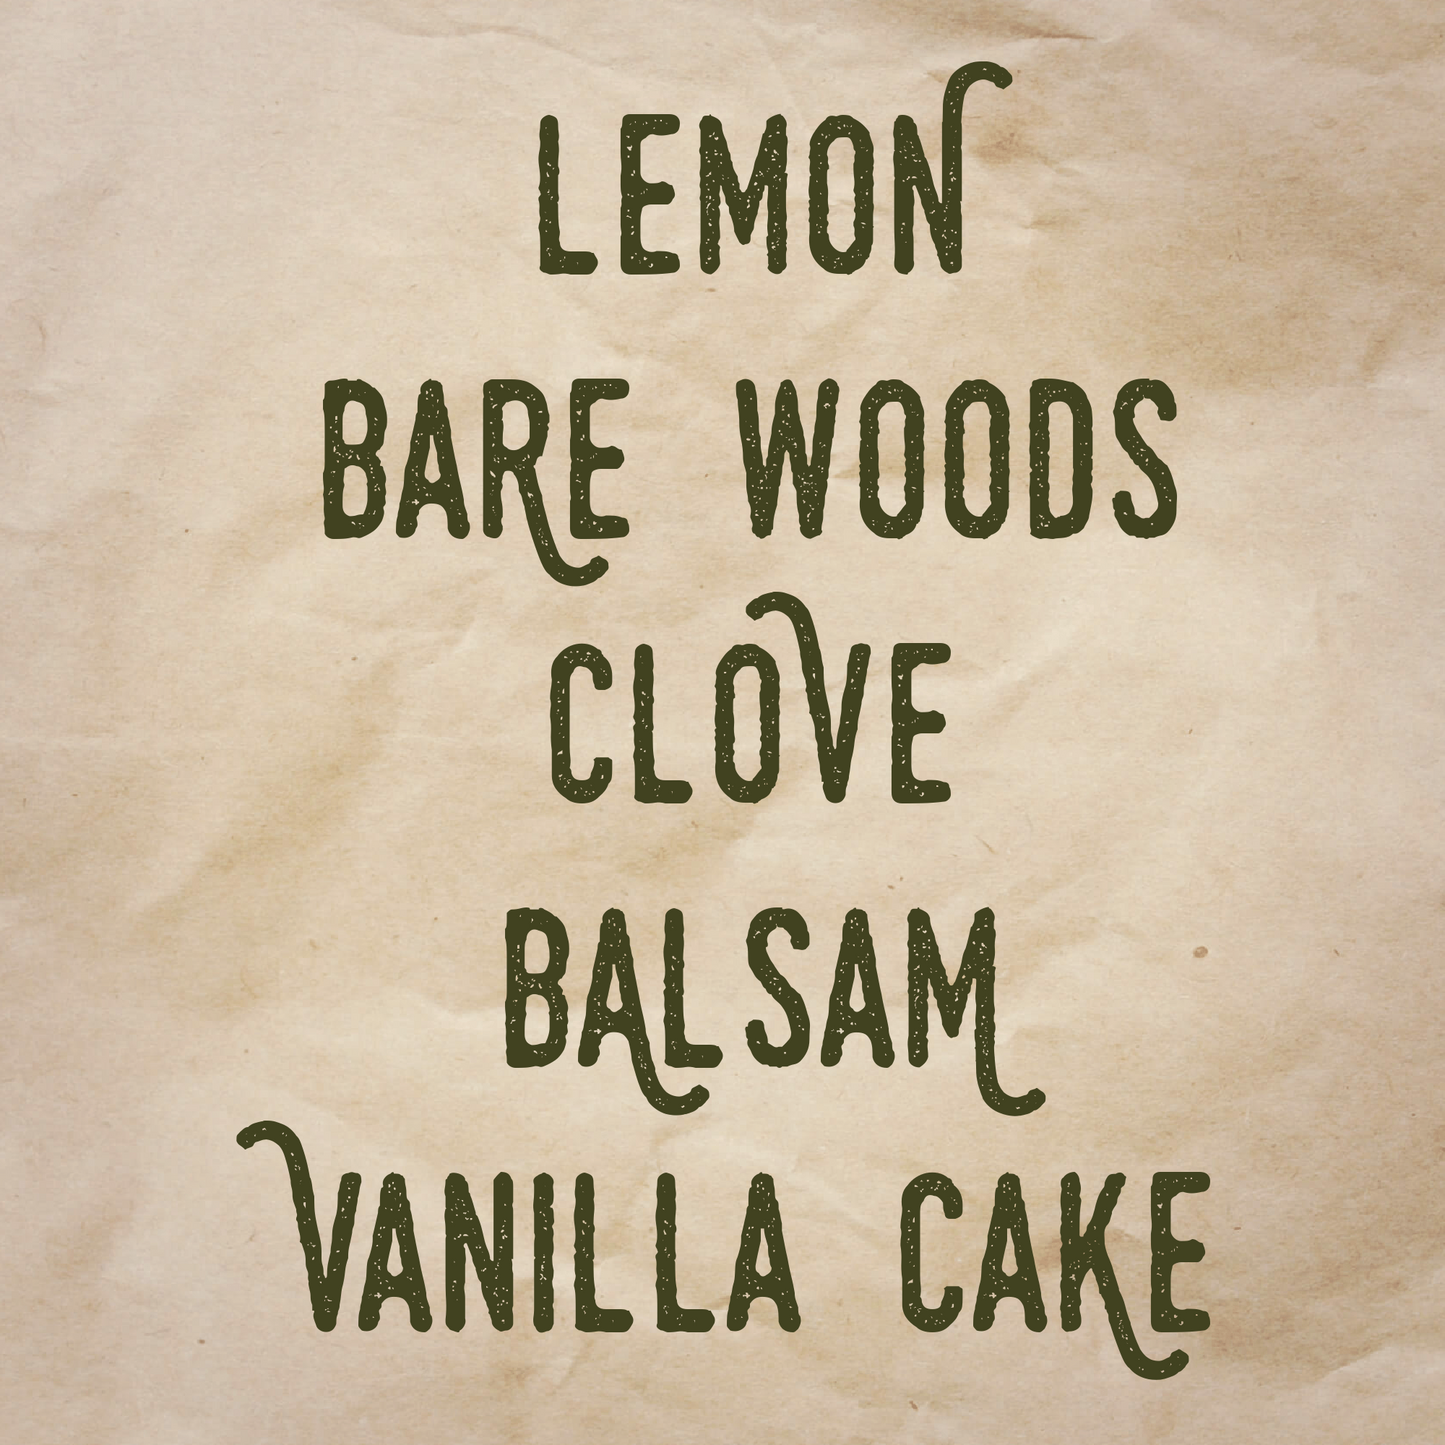 Dark Bright Wood scent notes: Lemon, bare woods, clove, balsam, and vanilla cake.